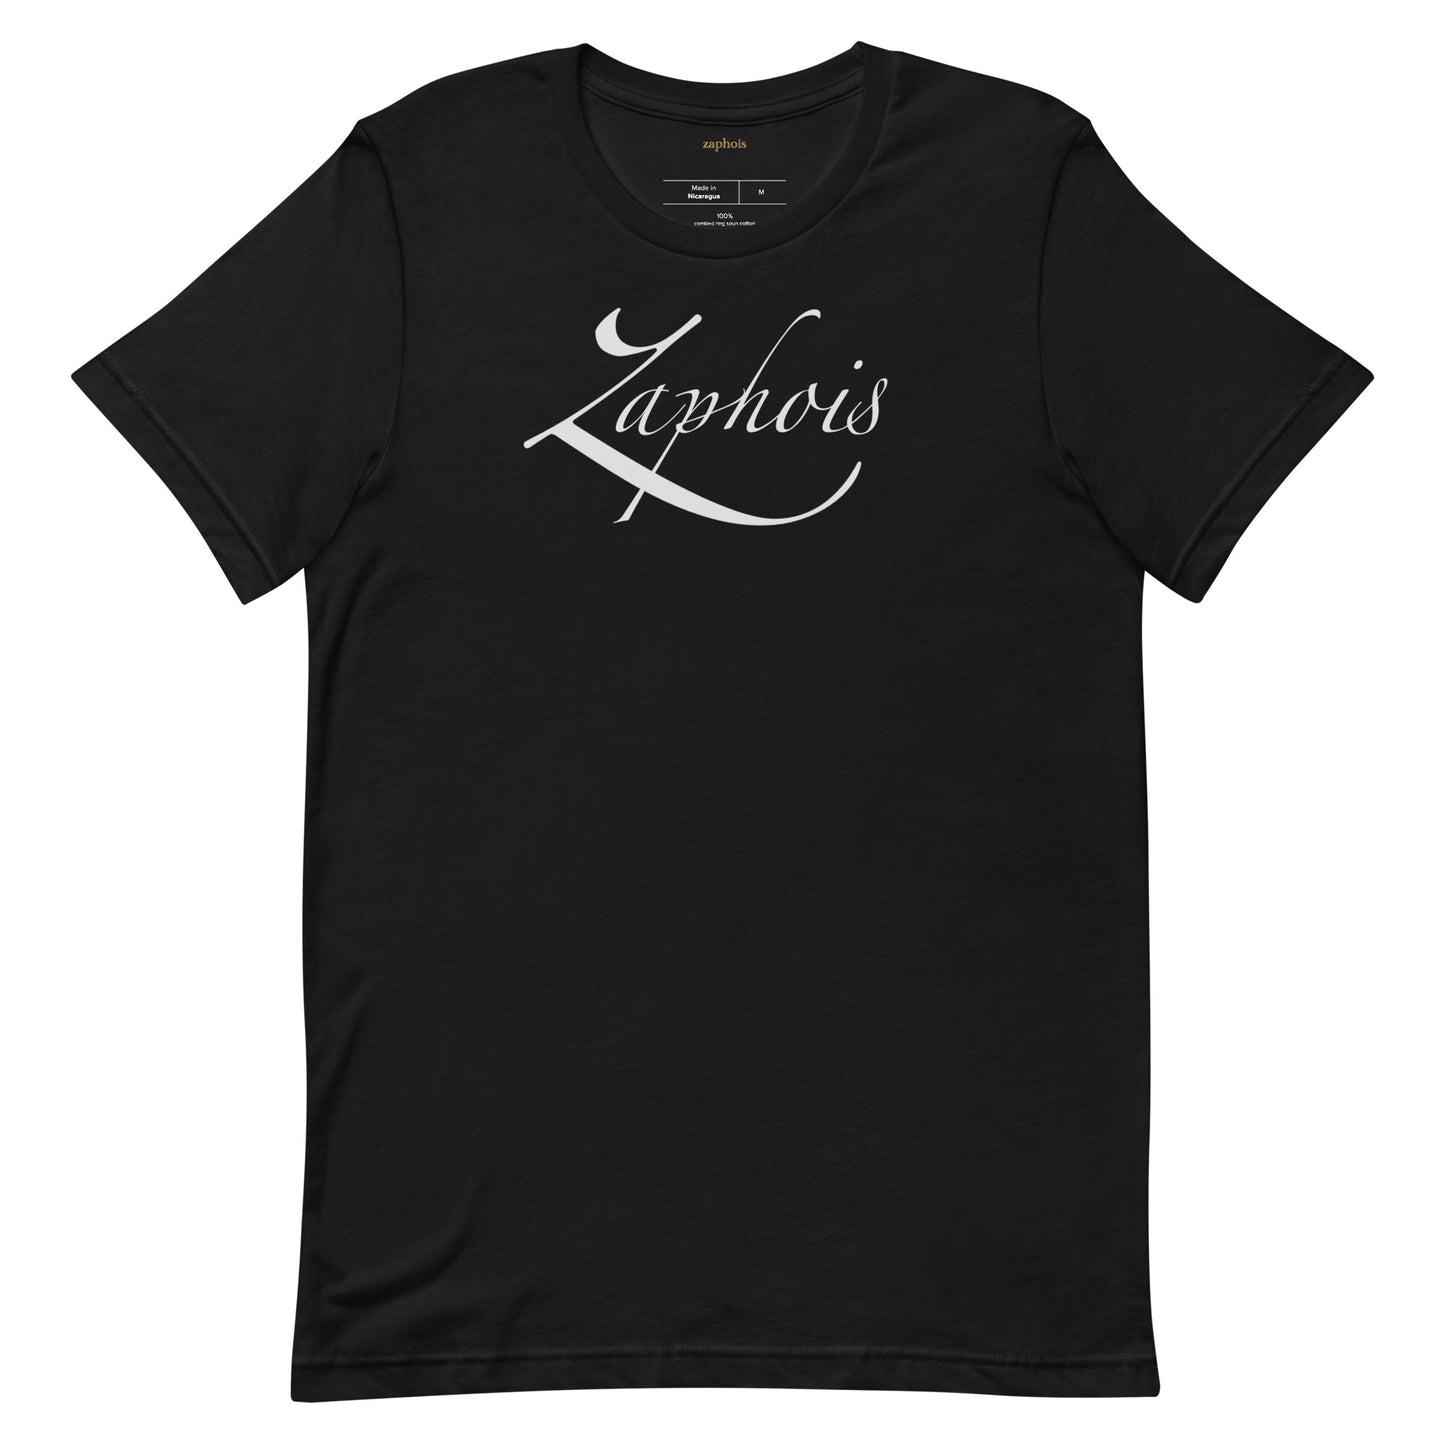 zaphois signature diamond shirt